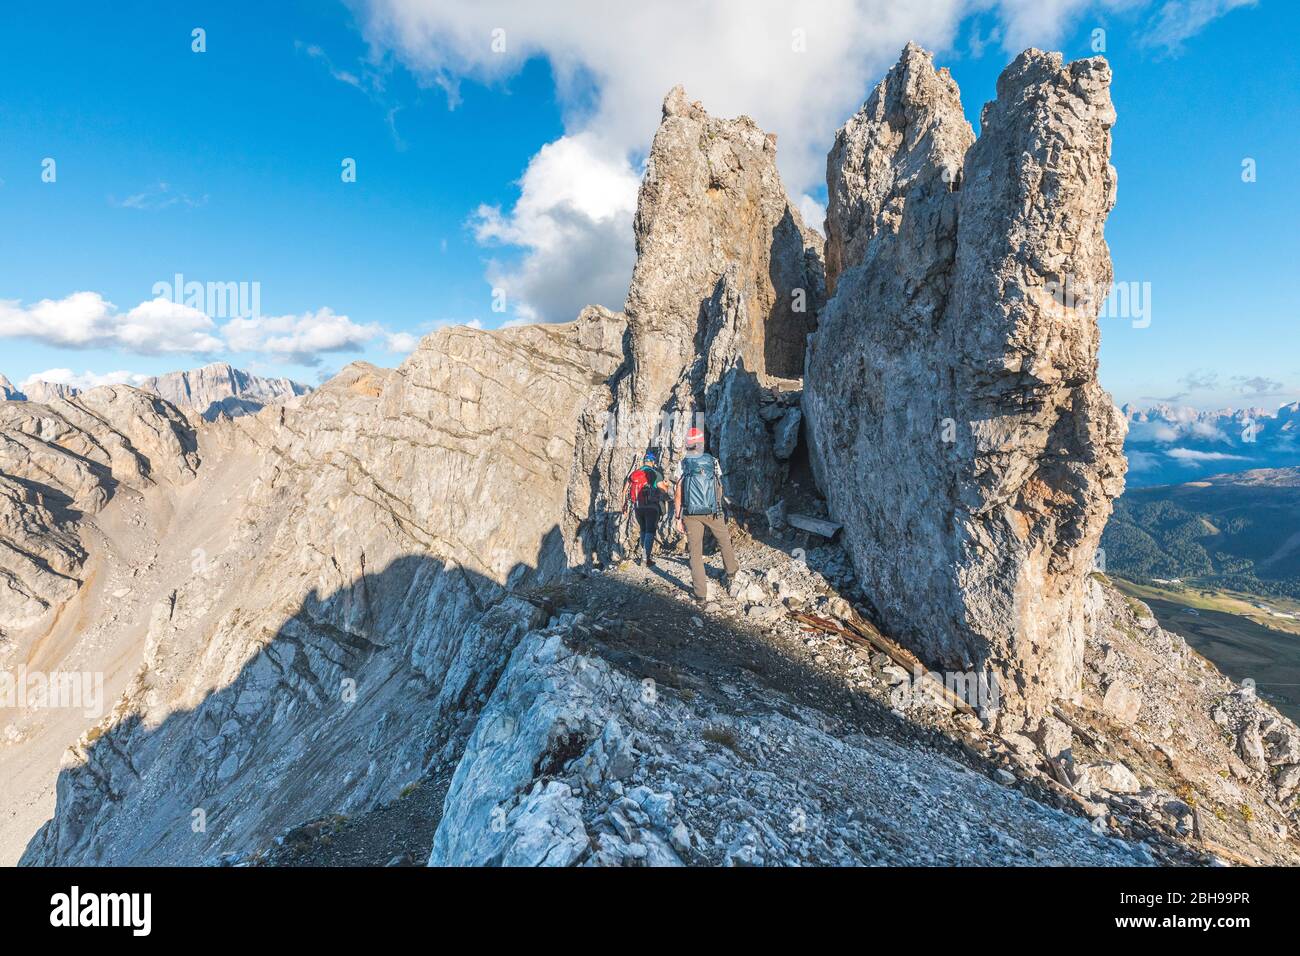 Two hikers on the Bepi Zac High Trail, Costabella Ridge, Marmolada group, Dolomites, Fassa Valley, Trento province, Trentino-Alto Adige, Italy Stock Photo